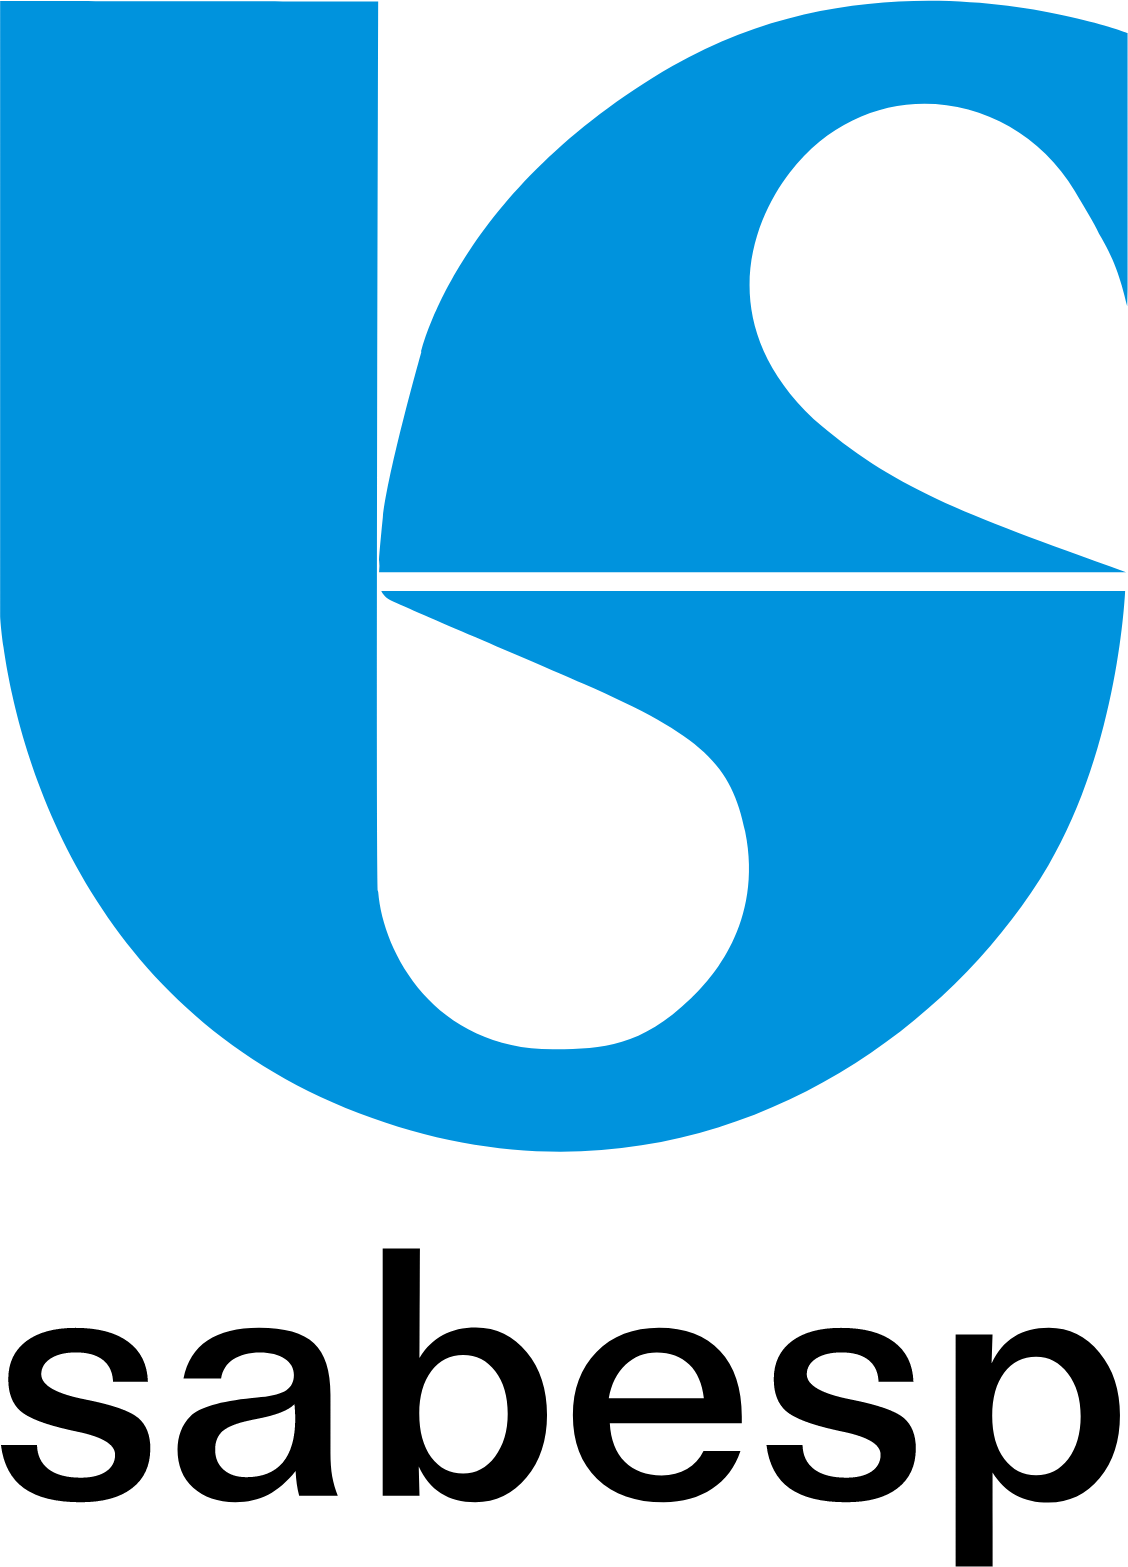 Sabesp logo large (transparent PNG)